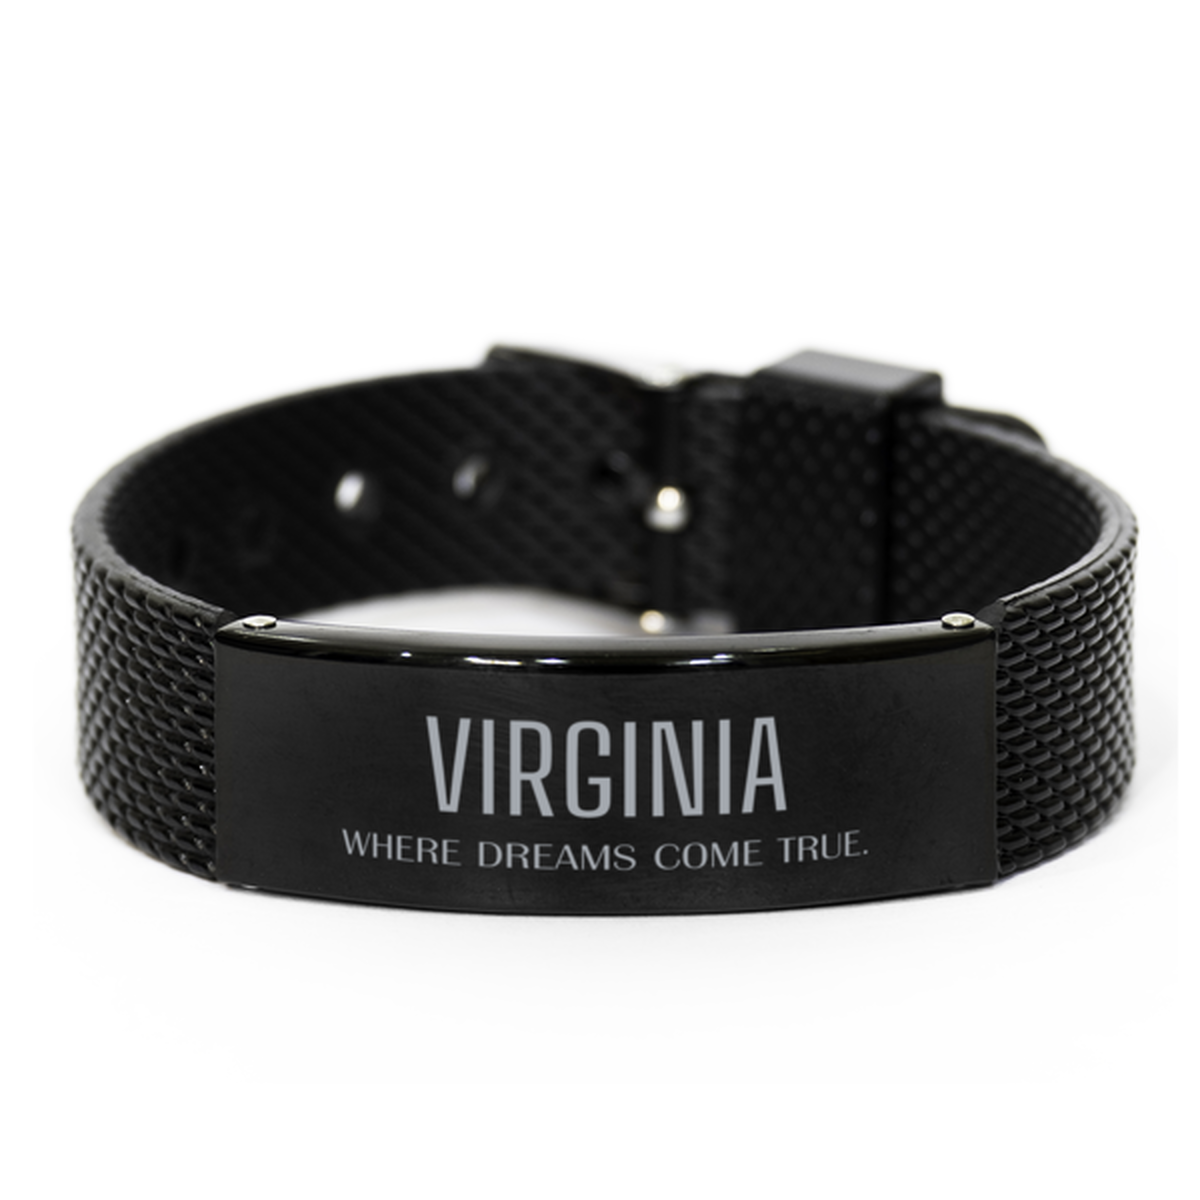 Love Virginia State Black Shark Mesh Bracelet, Virginia Where dreams come true, Birthday Inspirational Gifts For Virginia Men, Women, Friends